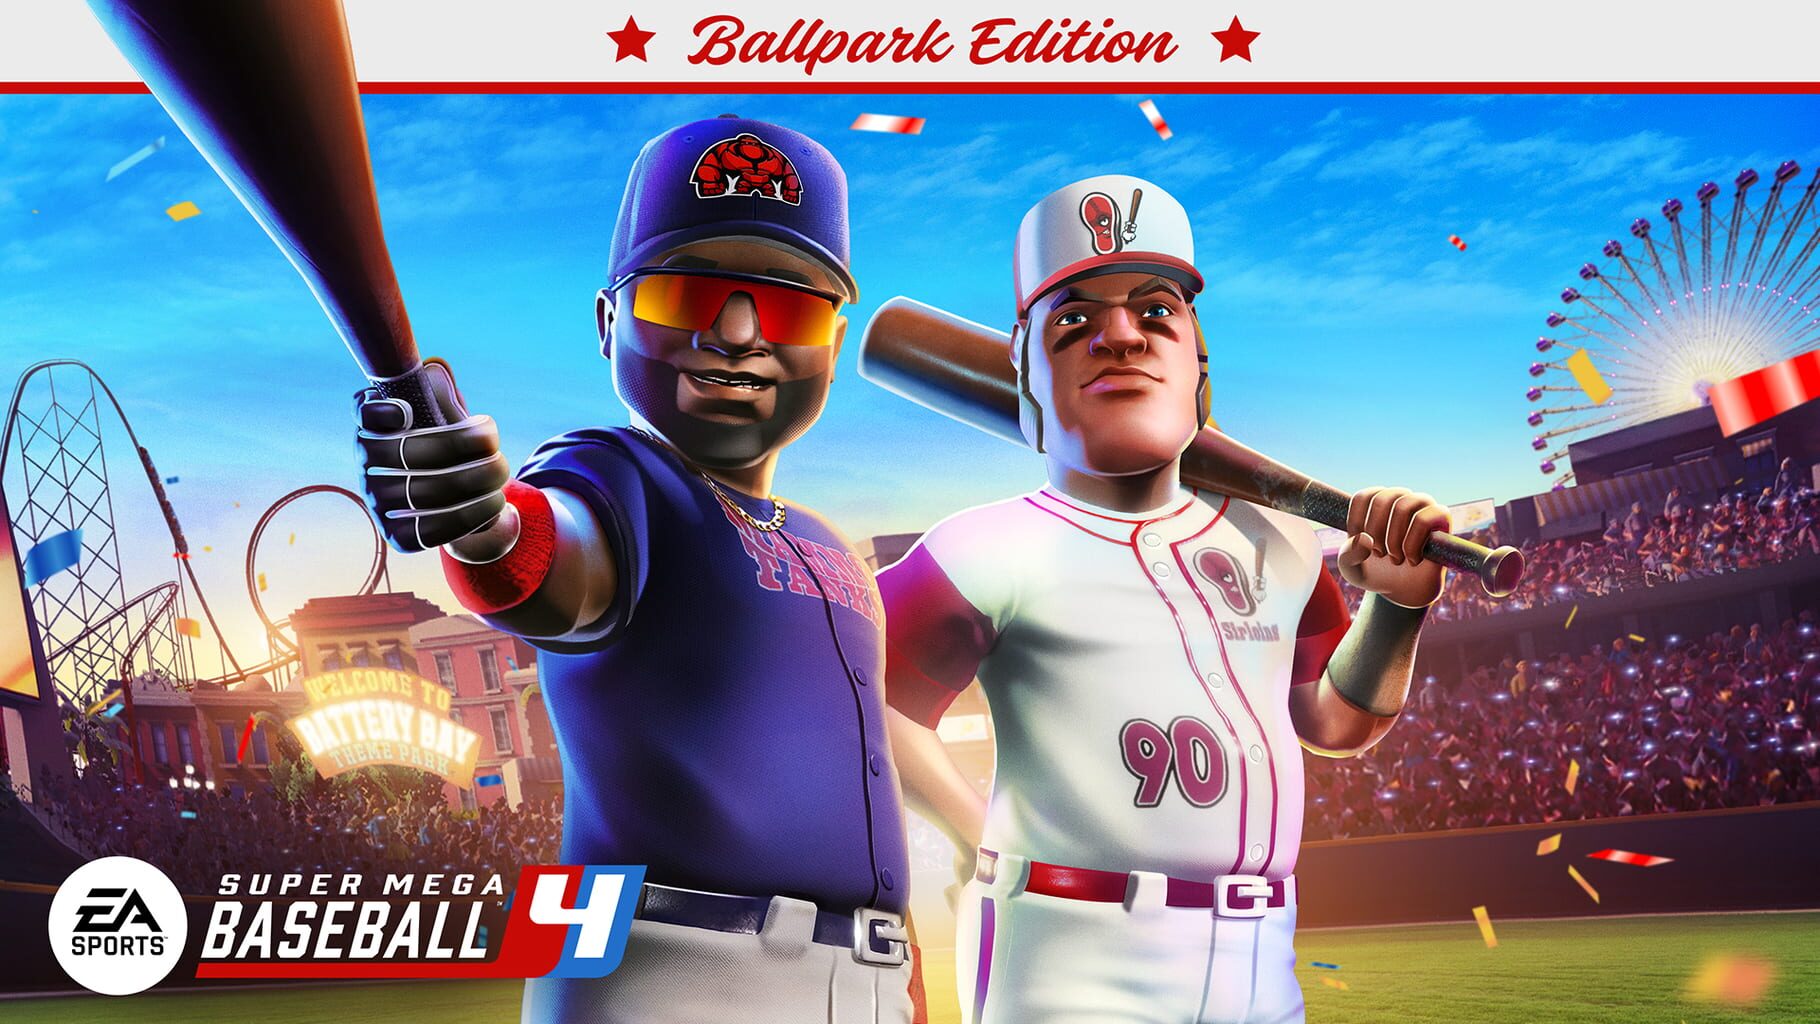 Super Mega Baseball 4: Ballpark Edition artwork